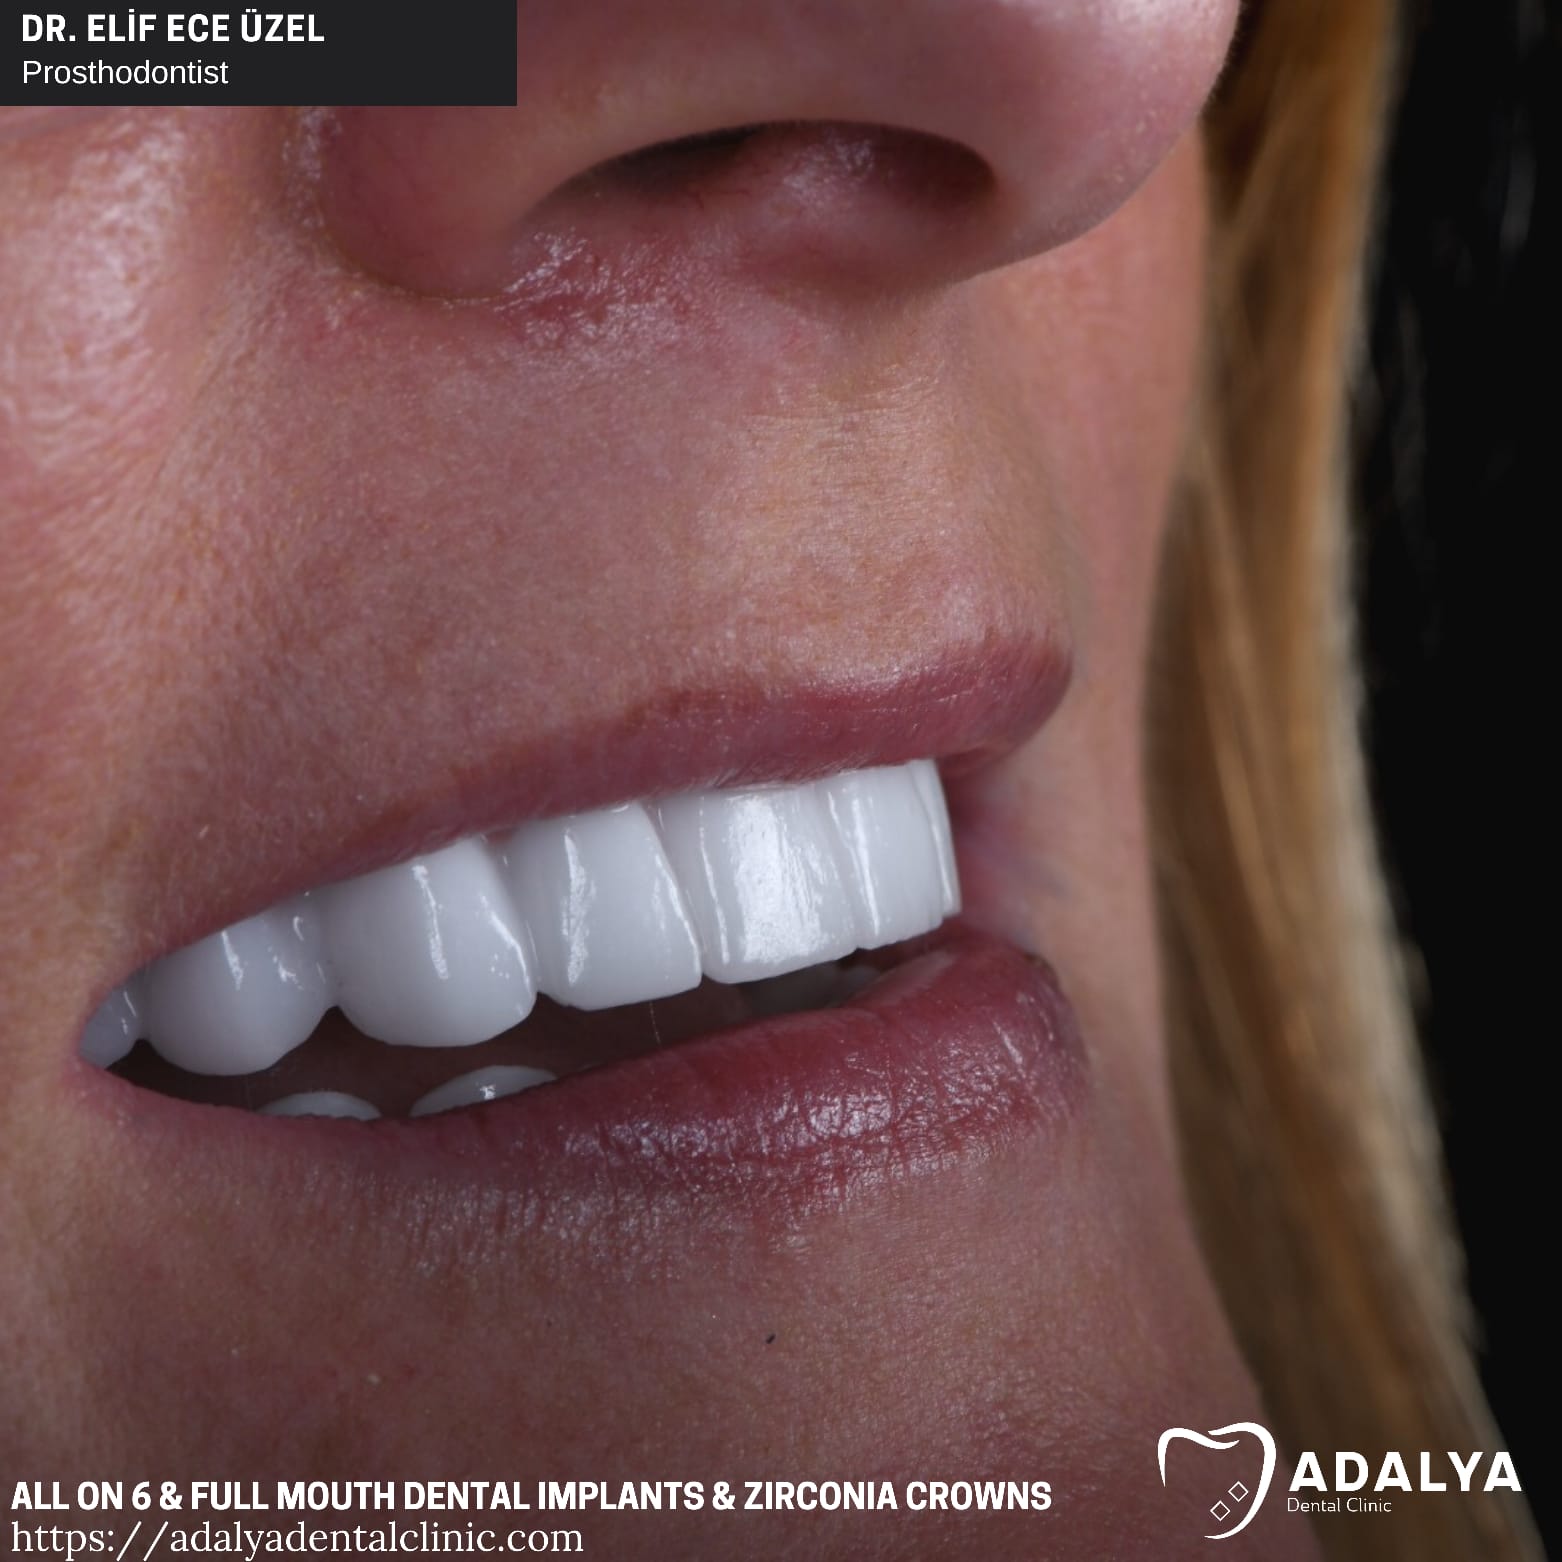 adalya full mouth dental implants package deals antalya price